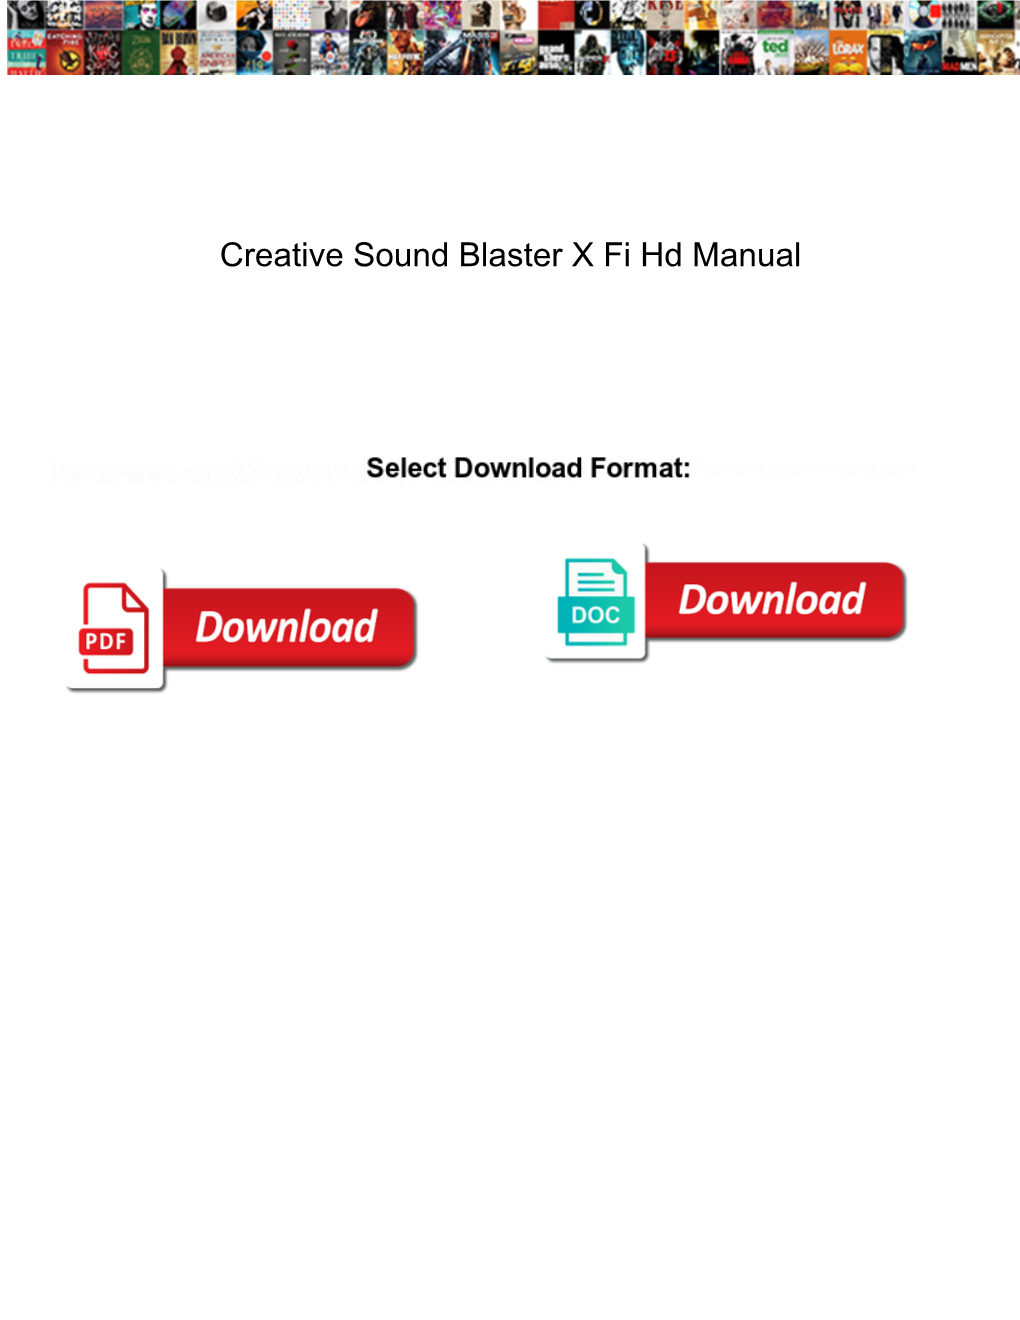 Creative Sound Blaster X Fi Hd Manual